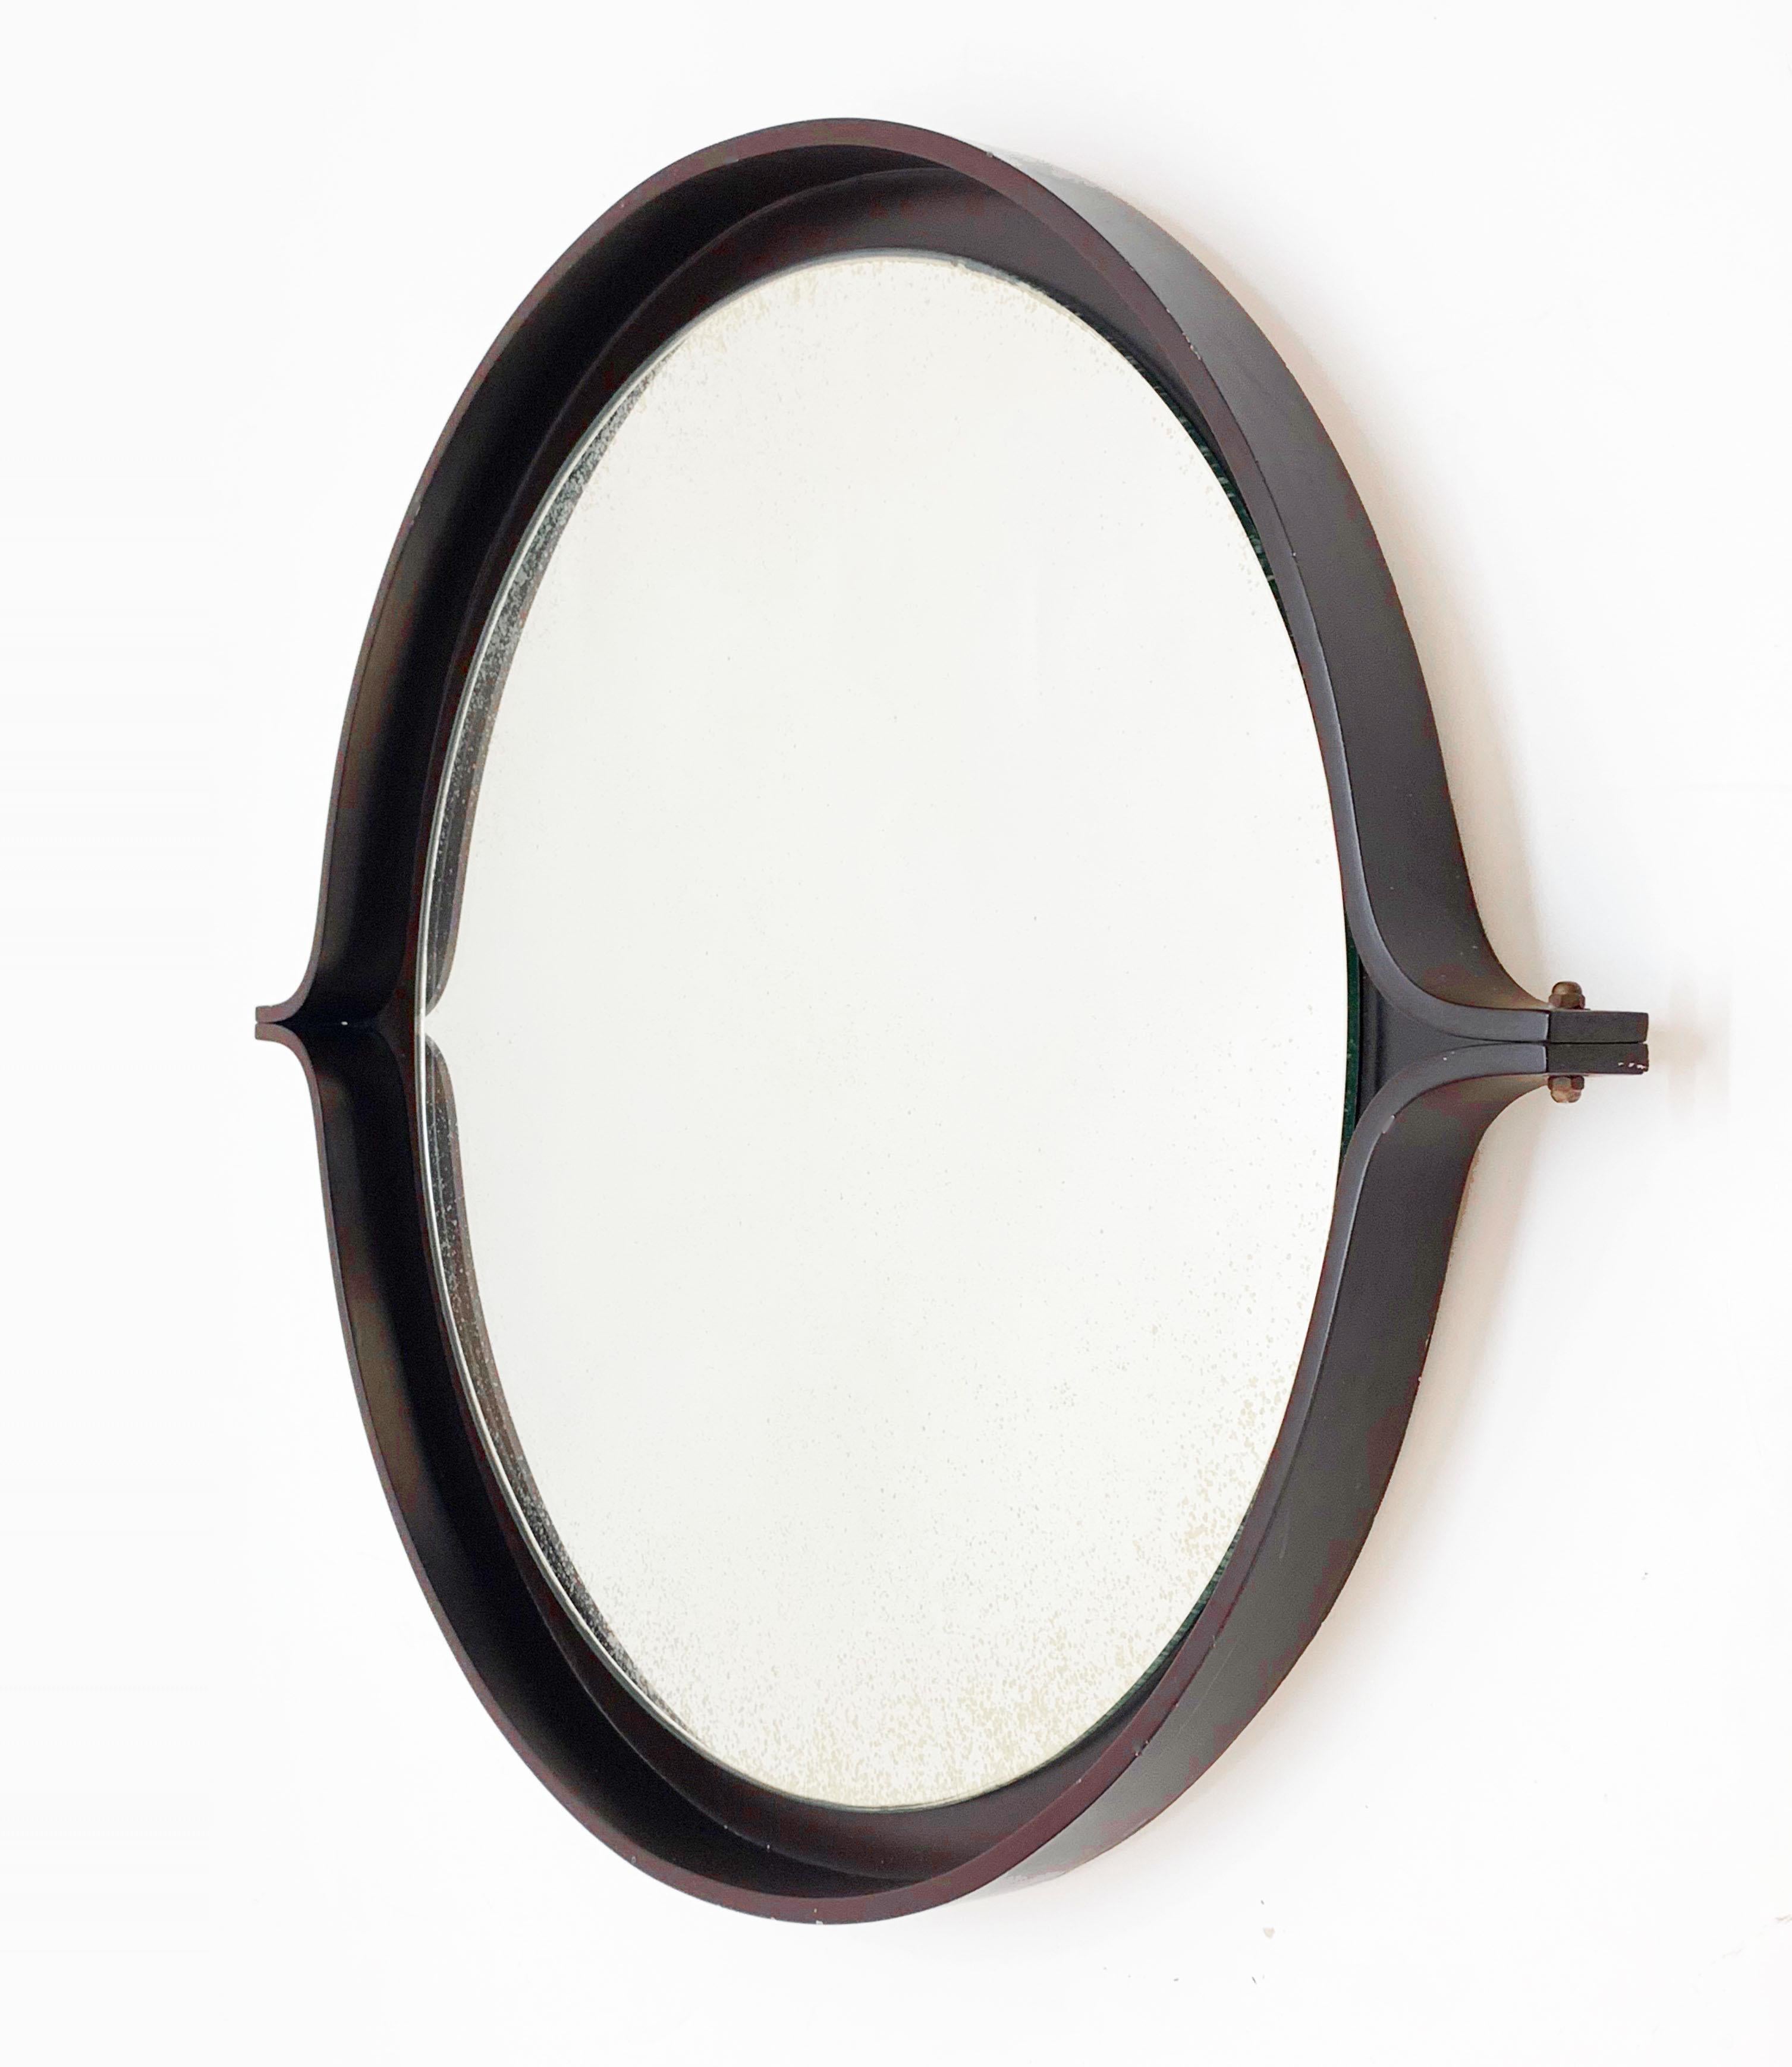 Midcentury Italian Round Wall Mirror with Round Dark Wood Frame, 1960s 2